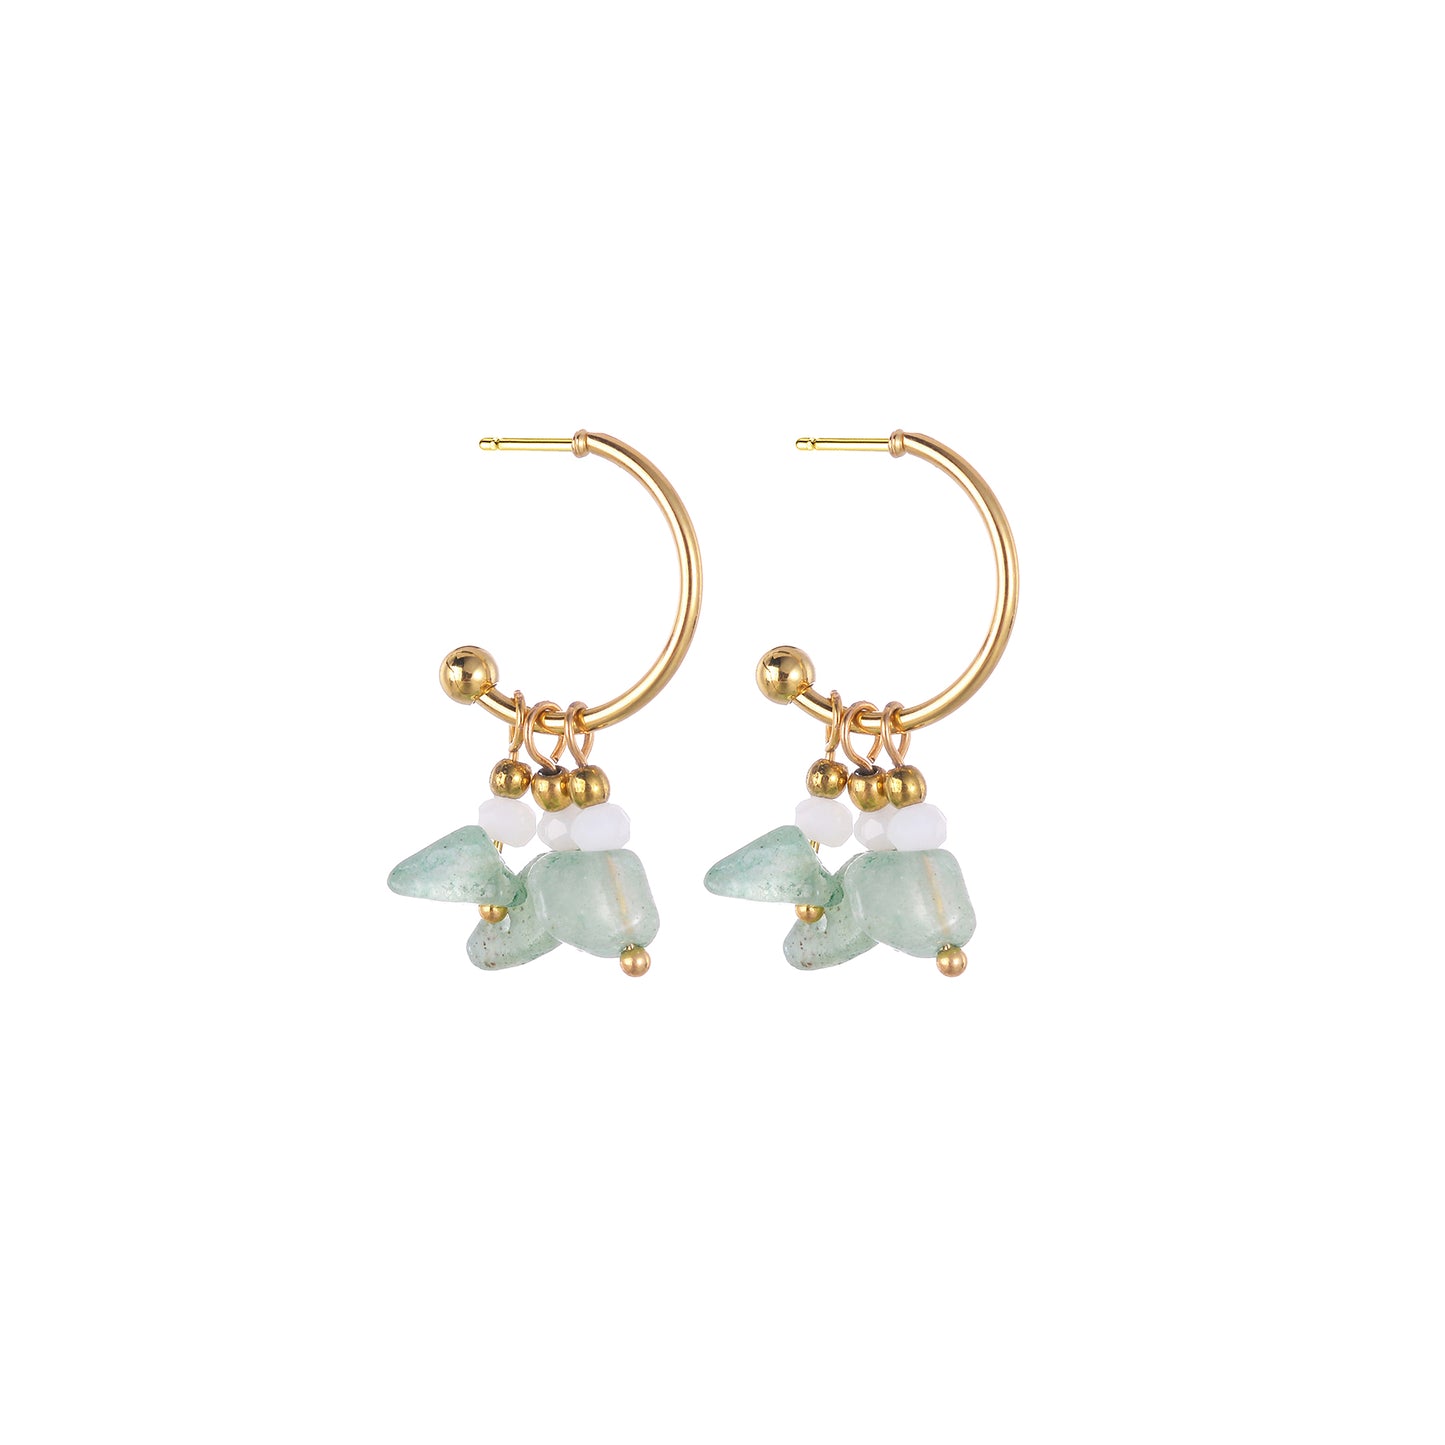 Gems Galore Earrings | 14K Gold Plated Earrings